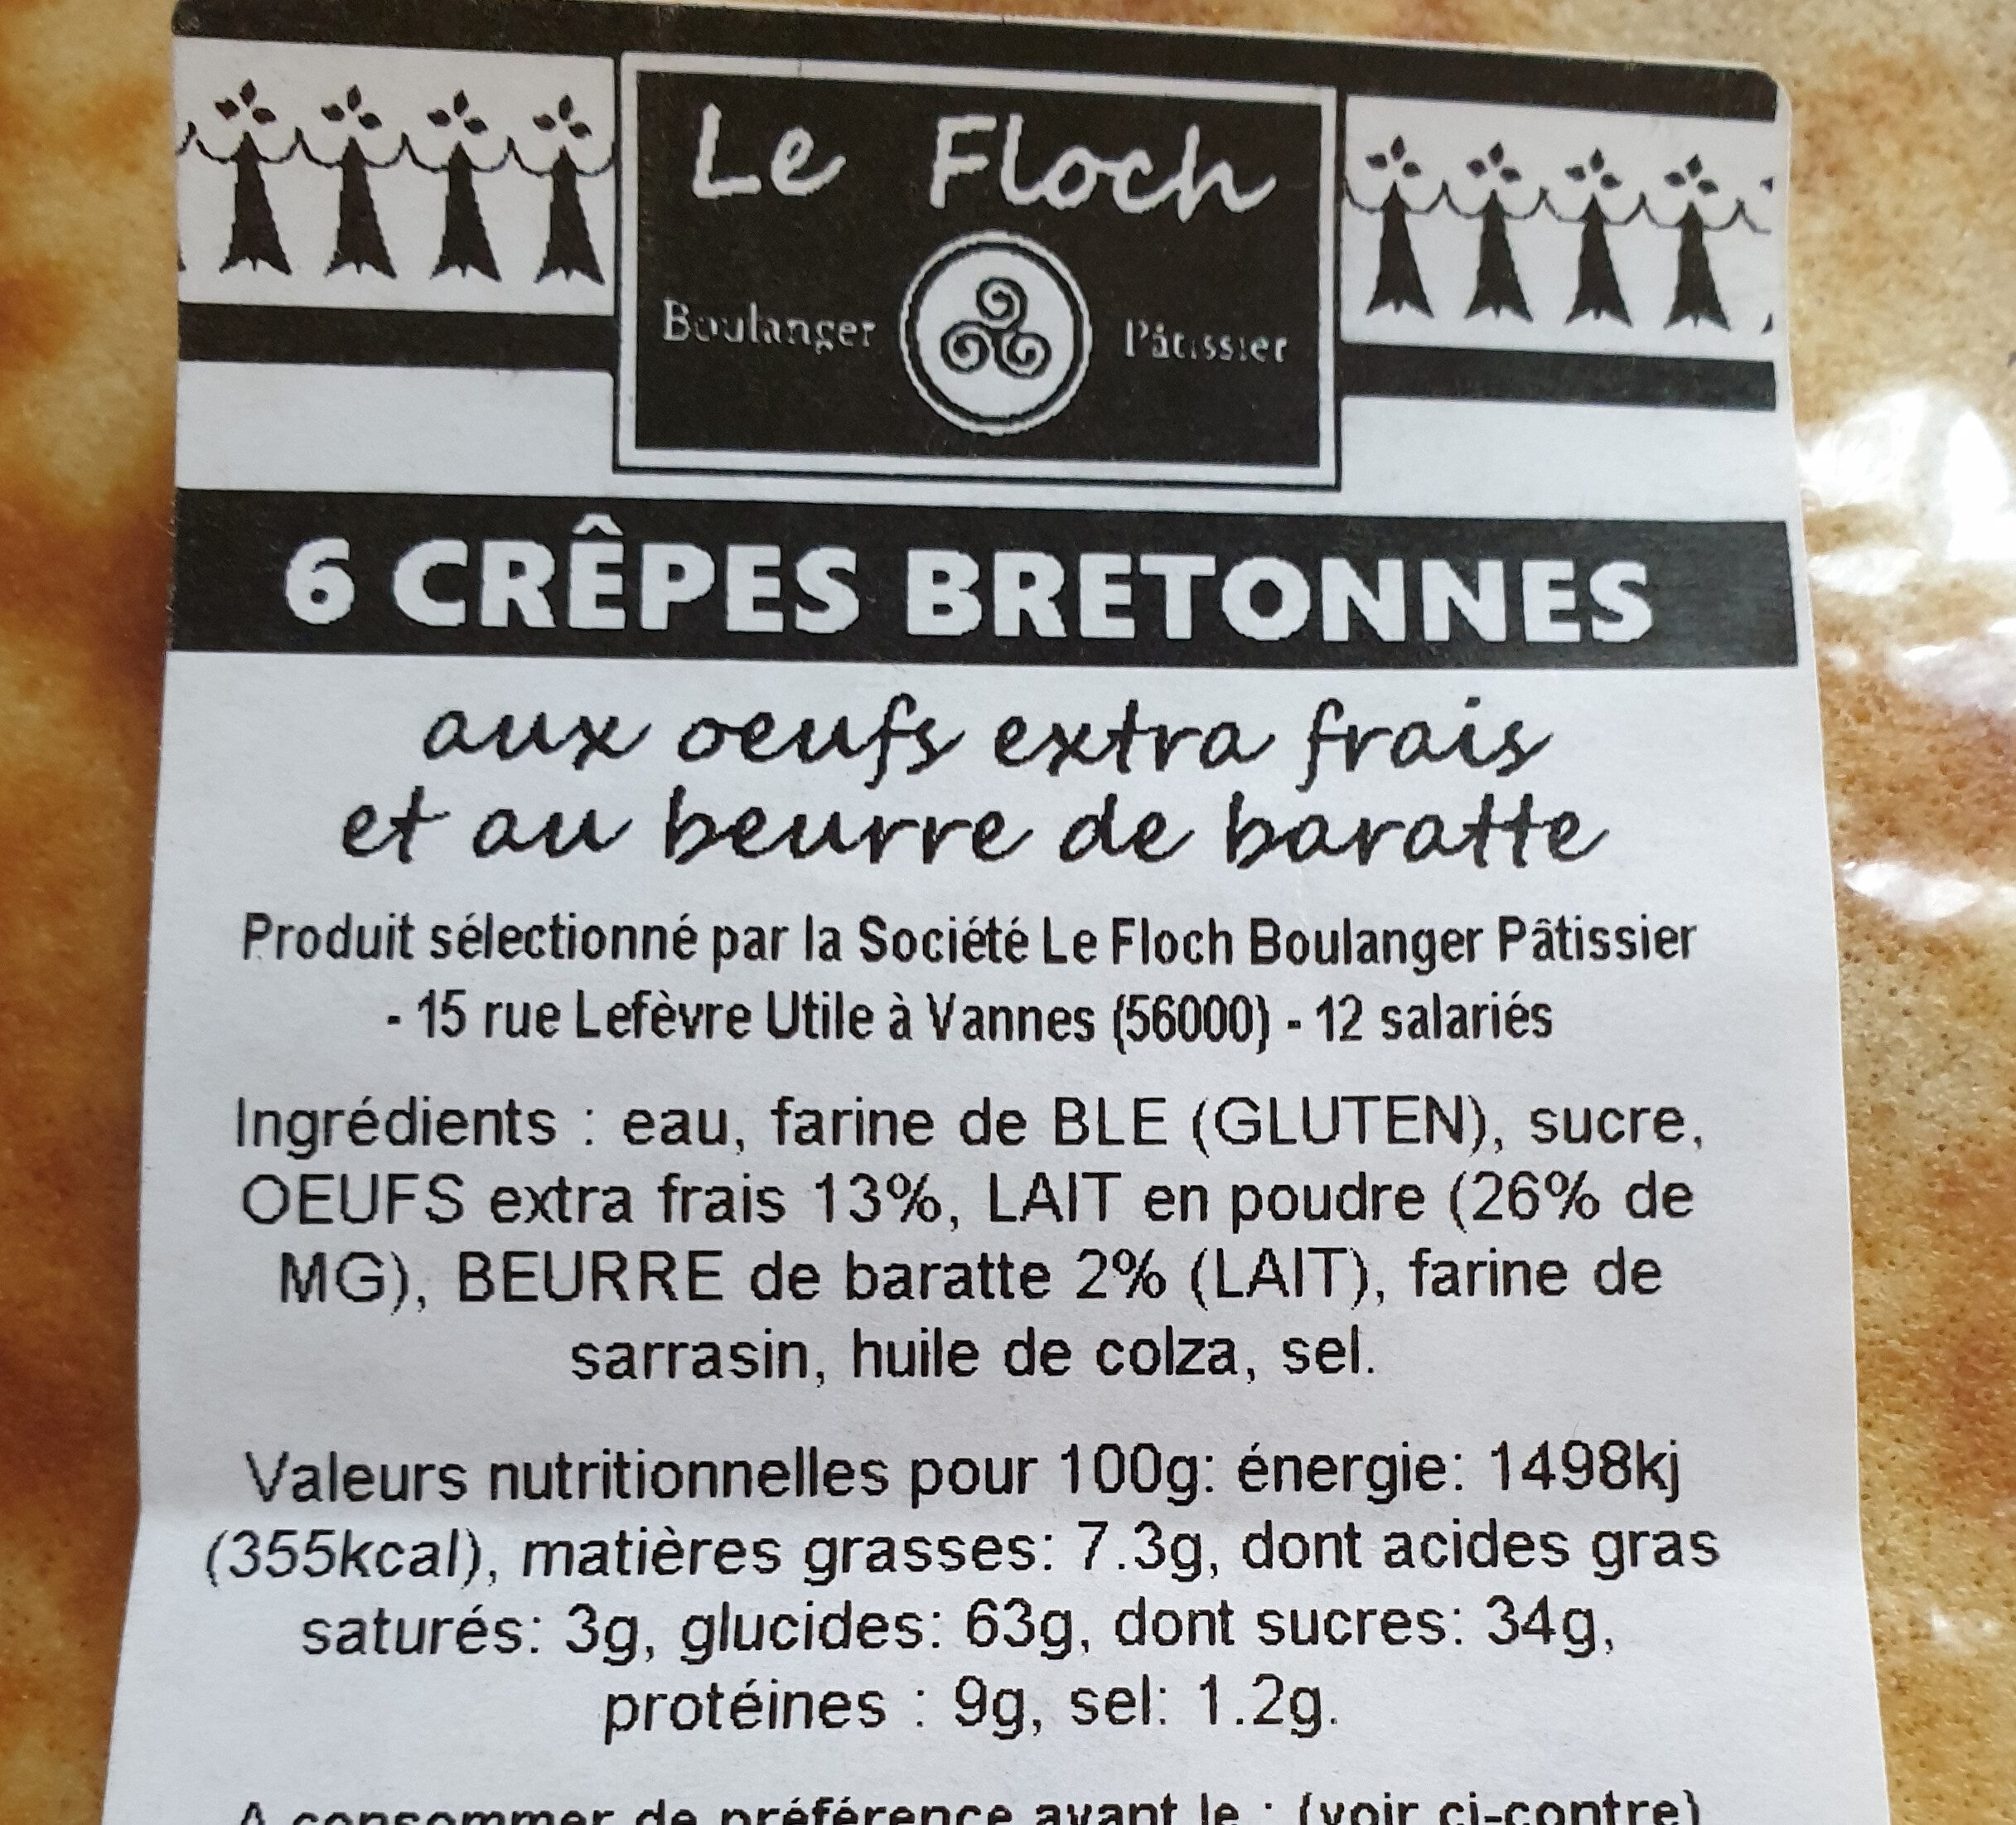 Crepe bretonne - المكونات - fr